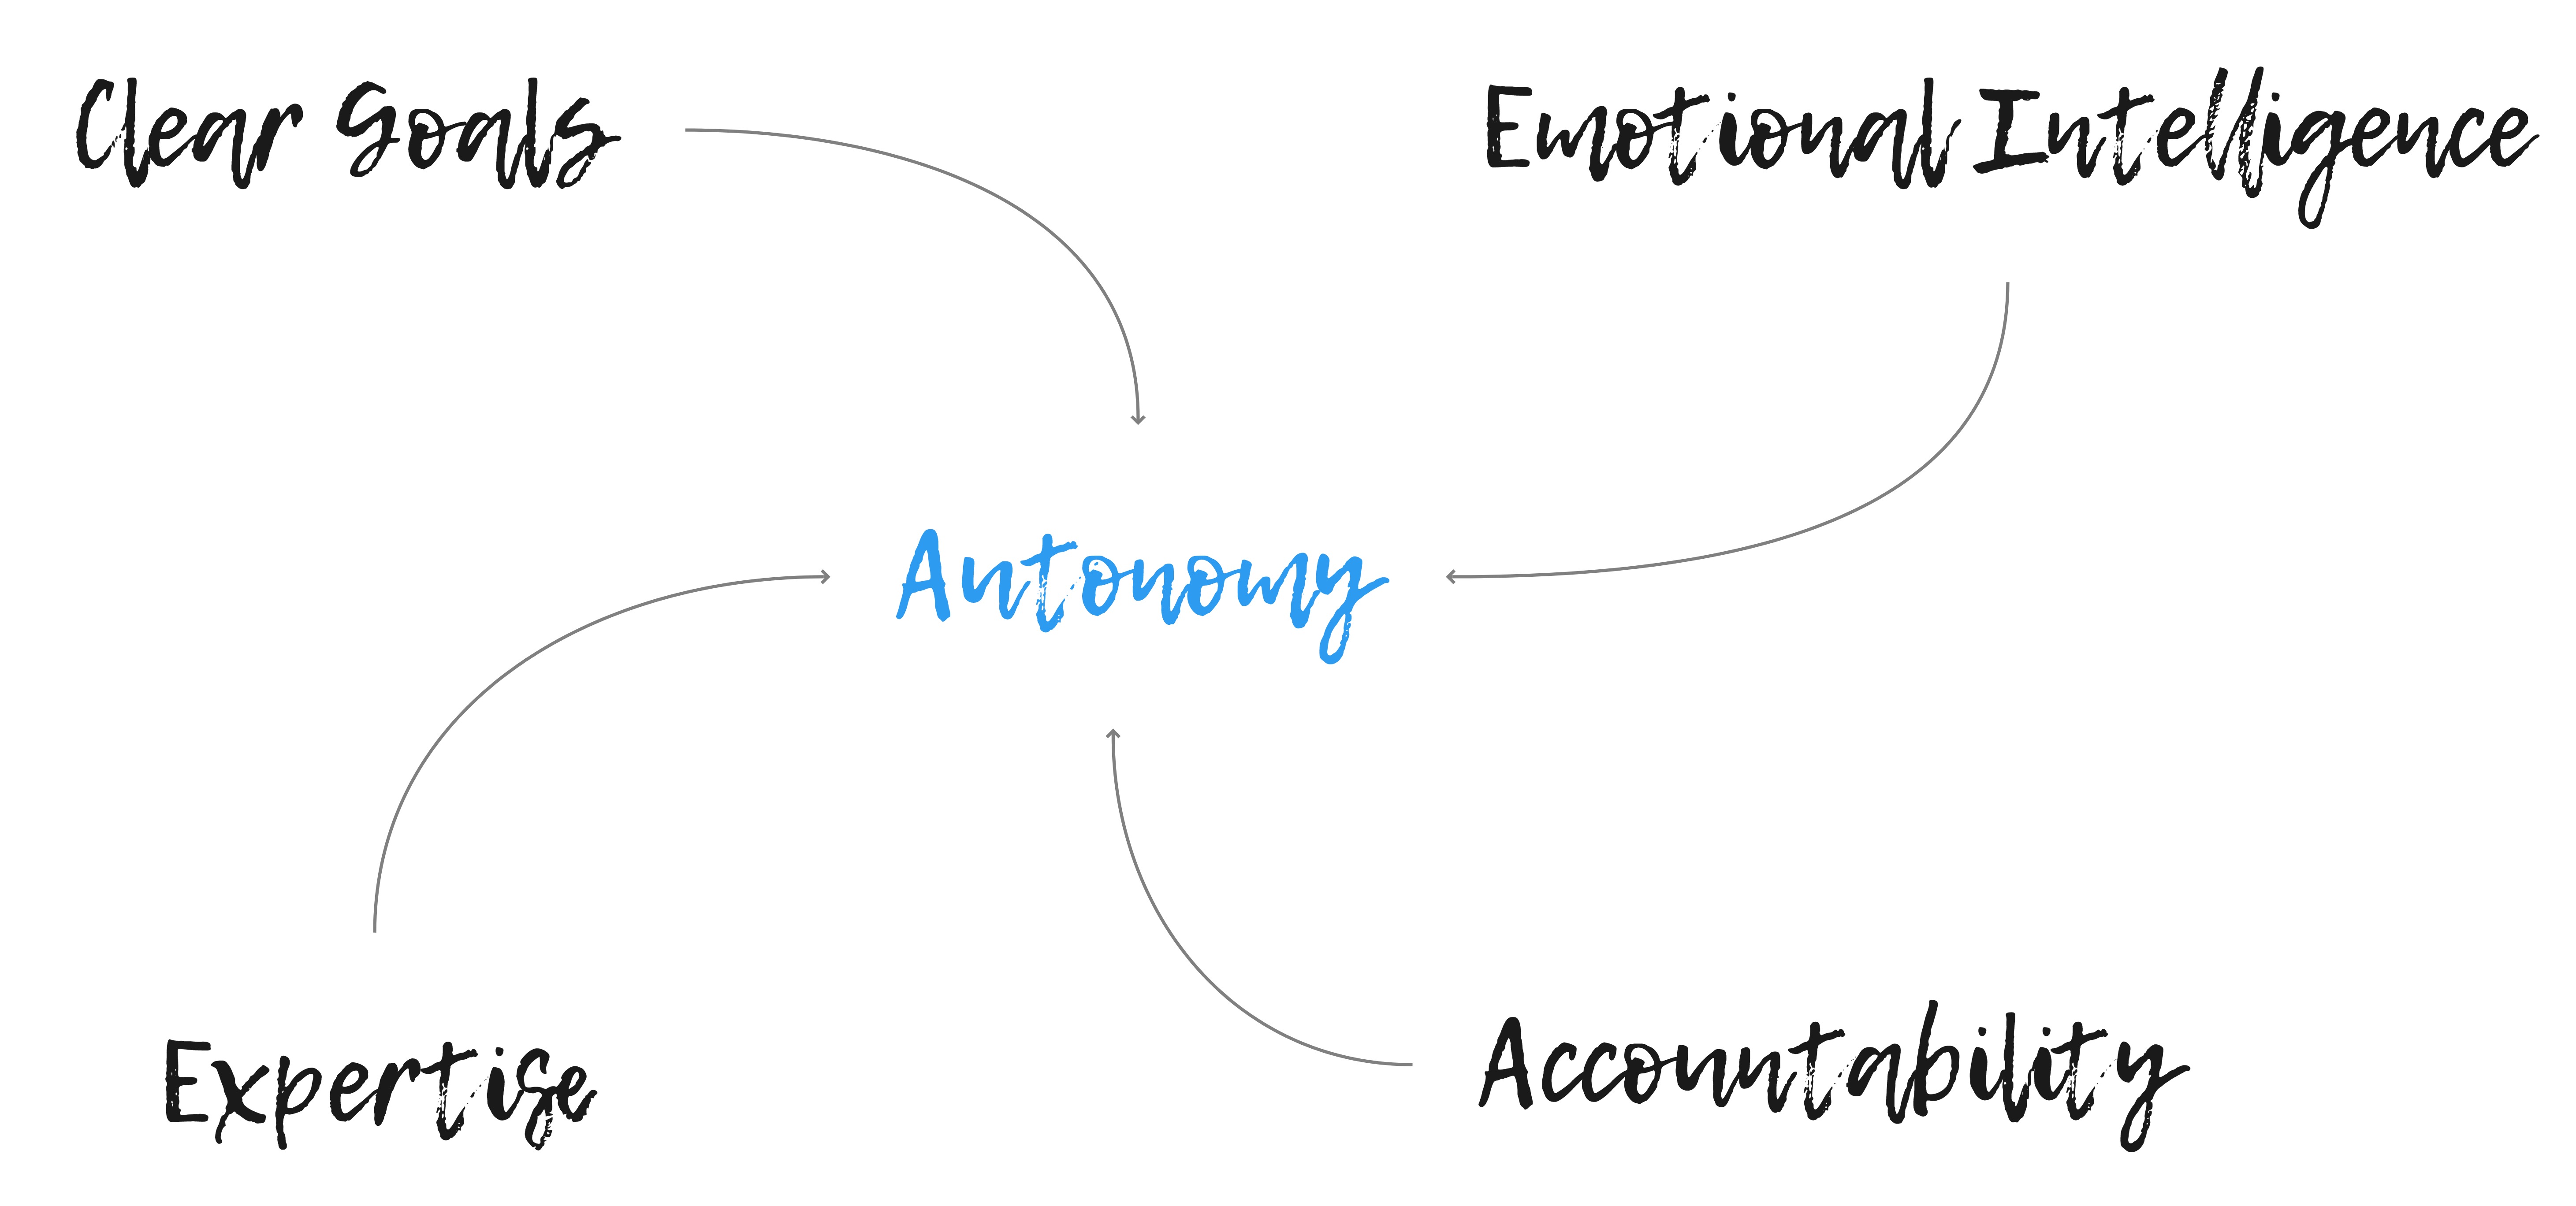 Autonomy is a continuum